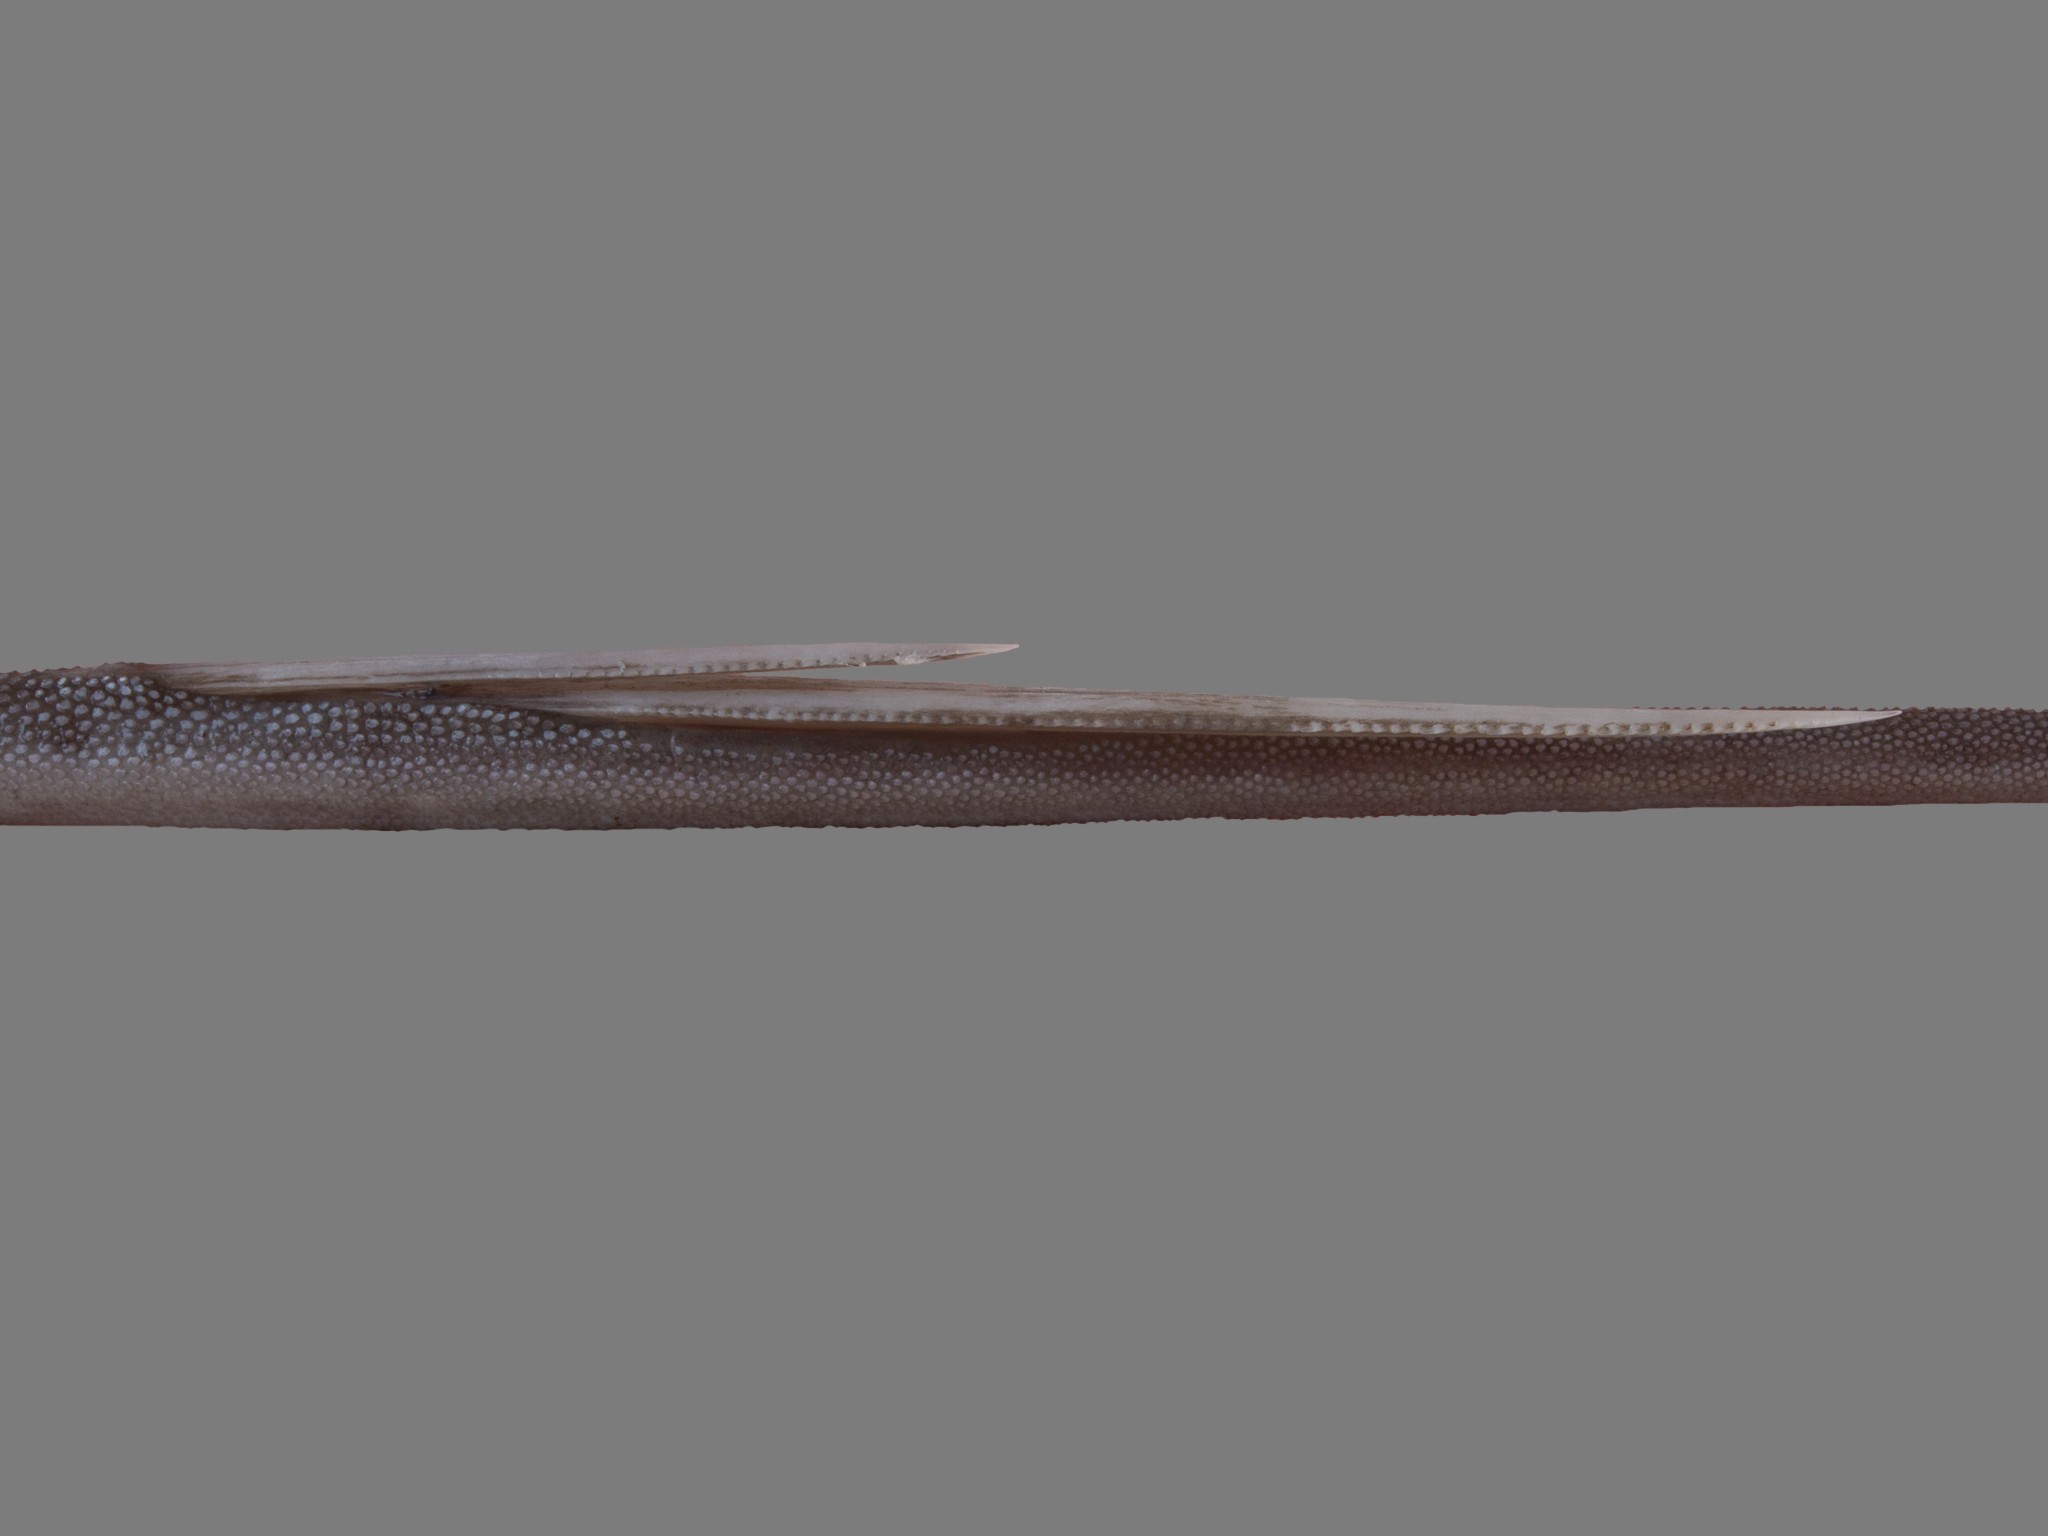 Maculabatis ambigua, male, 48 cm DW, tail with spines, Saudi Arabia: Jizan; S.V. Bogorodsky